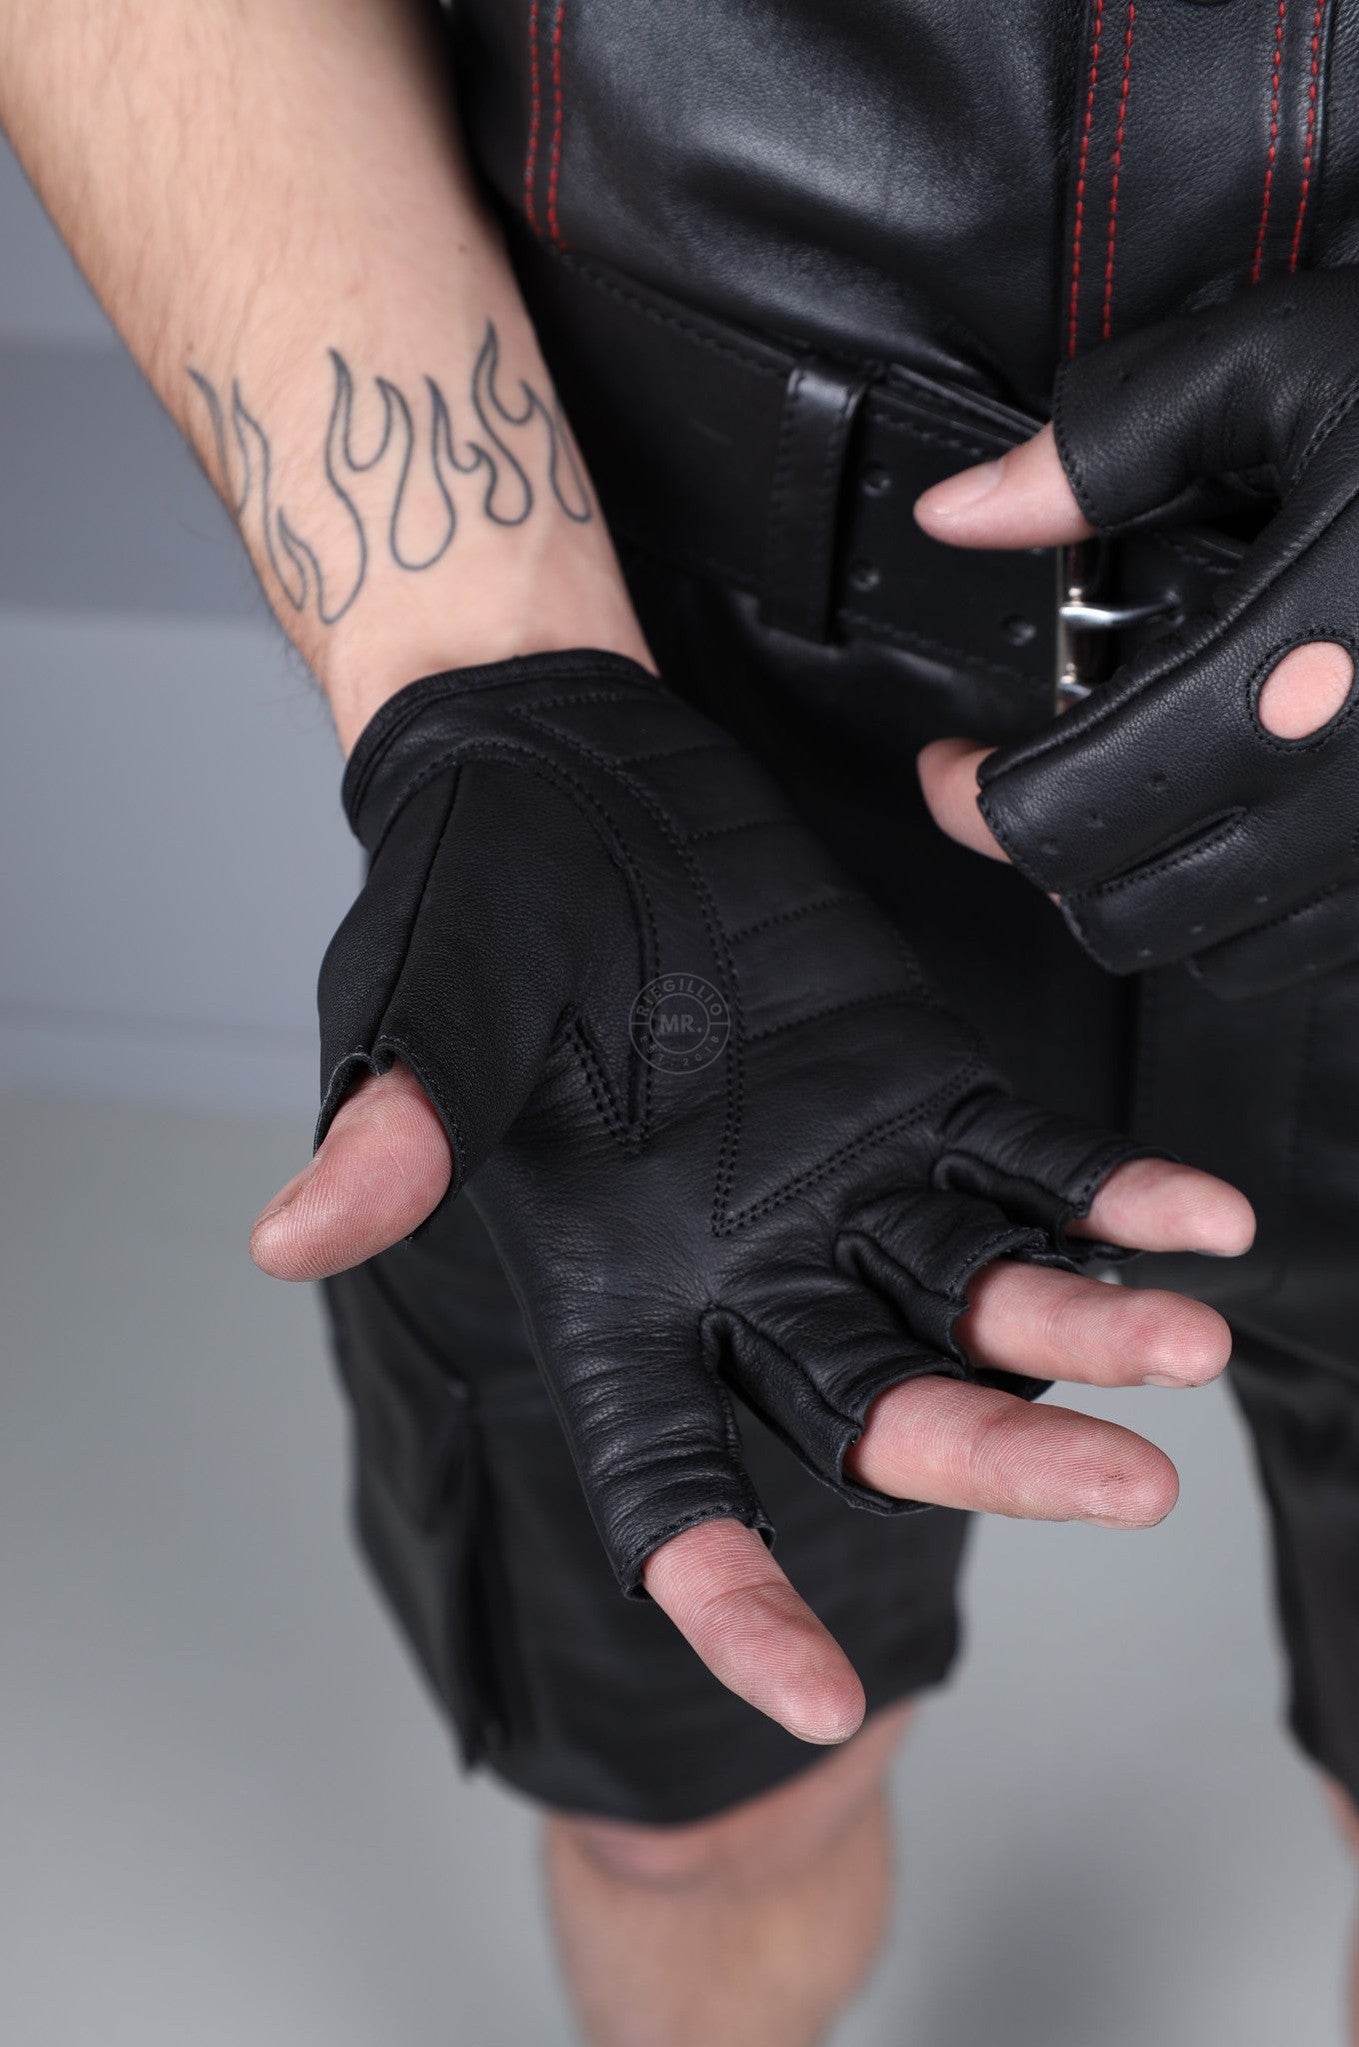 Black Leather Fingerless Gloves at MR. Riegillio